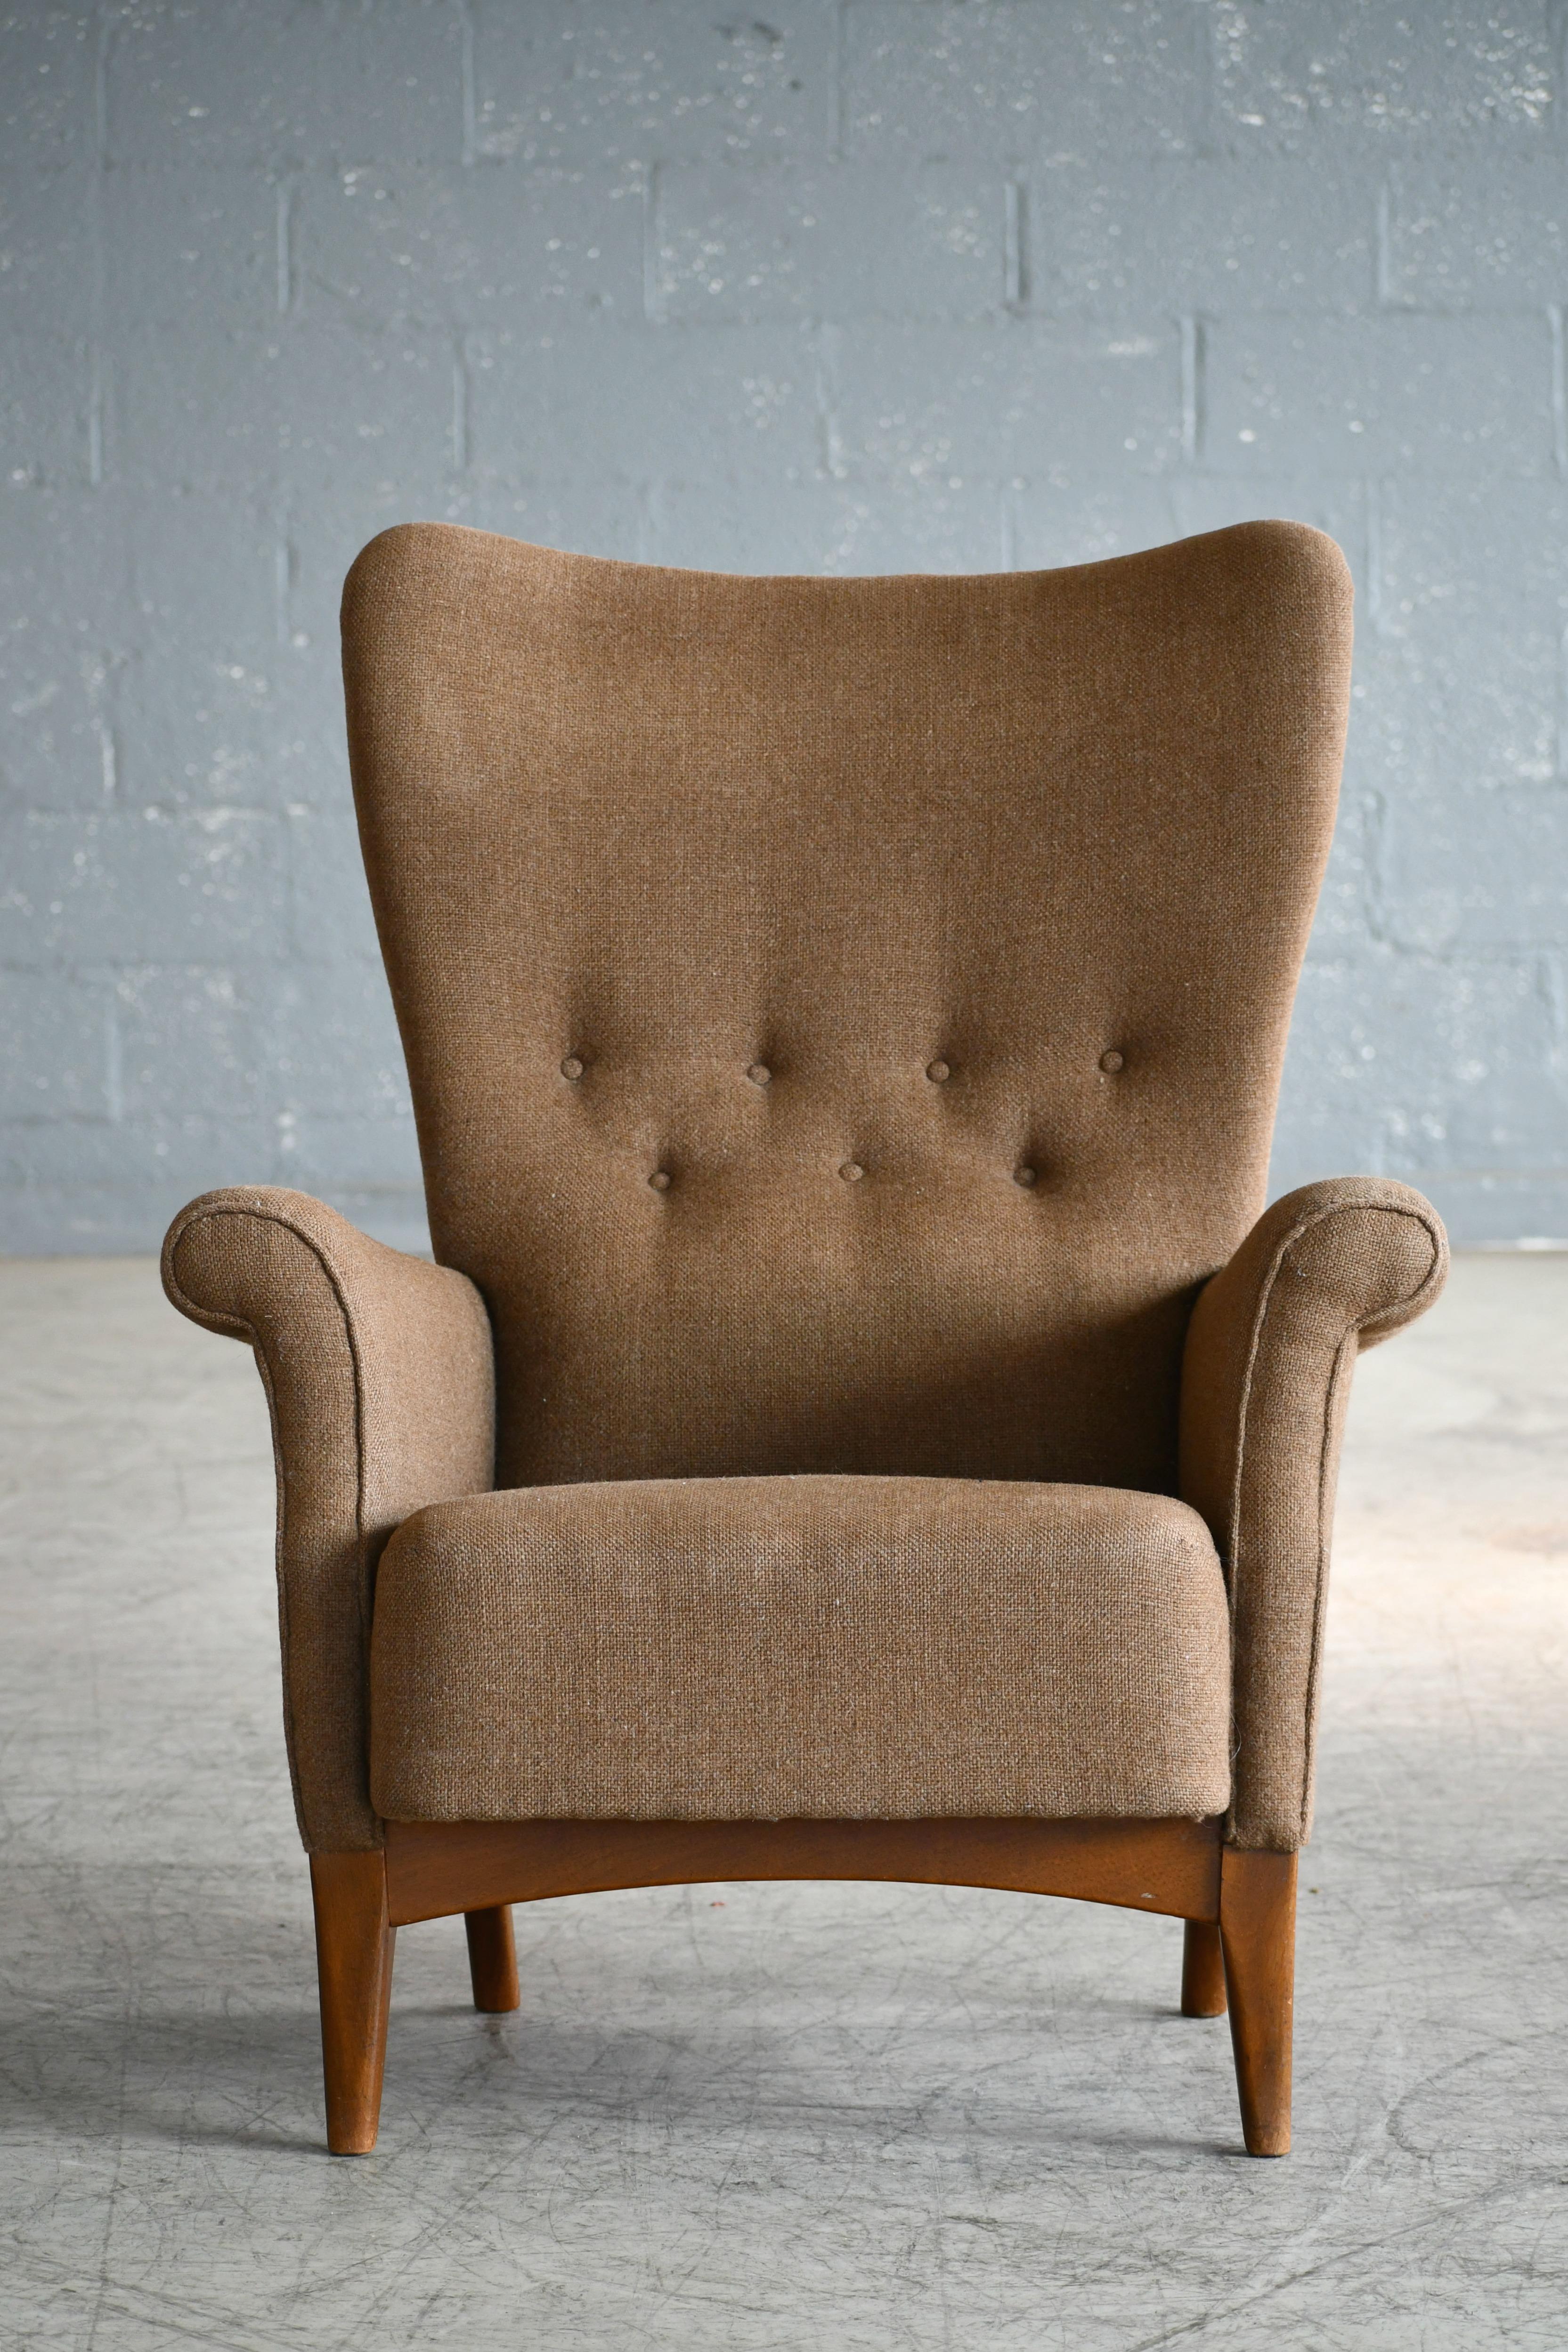 Mid-Century Modern Fritz Hansen 1950s Highback Lounge Chair Model 8023 Variant Danish Midcentury